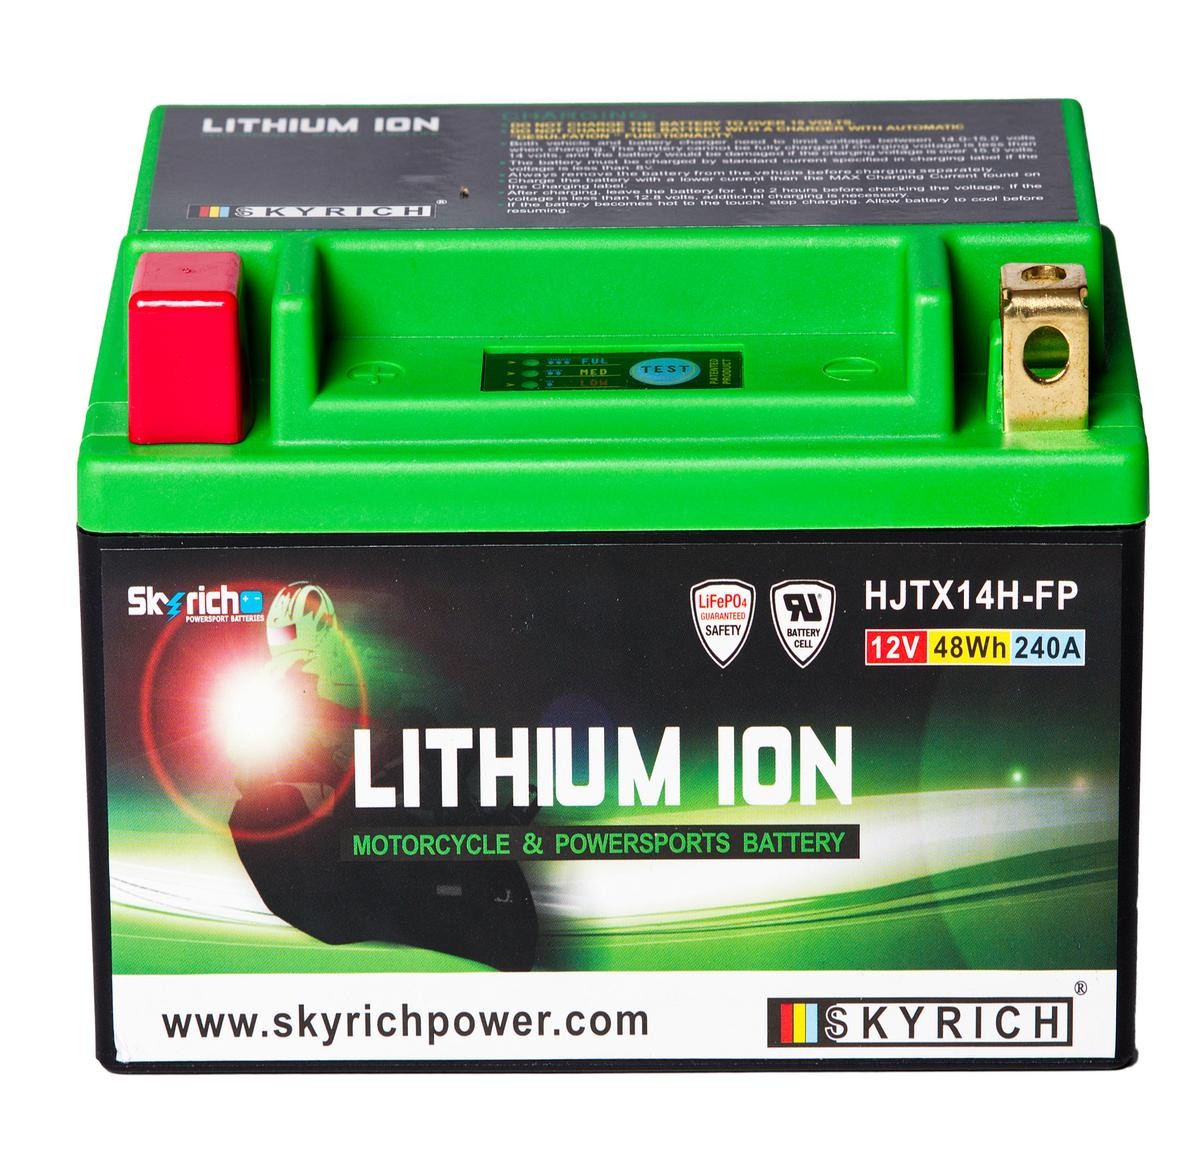 SKYRICH LITHIUM ION Batterie 12V 4Ah 240A N Li-Ionen-Batterie HJTX14H-FP PIAGGIO Mofa Maxi-Scooter